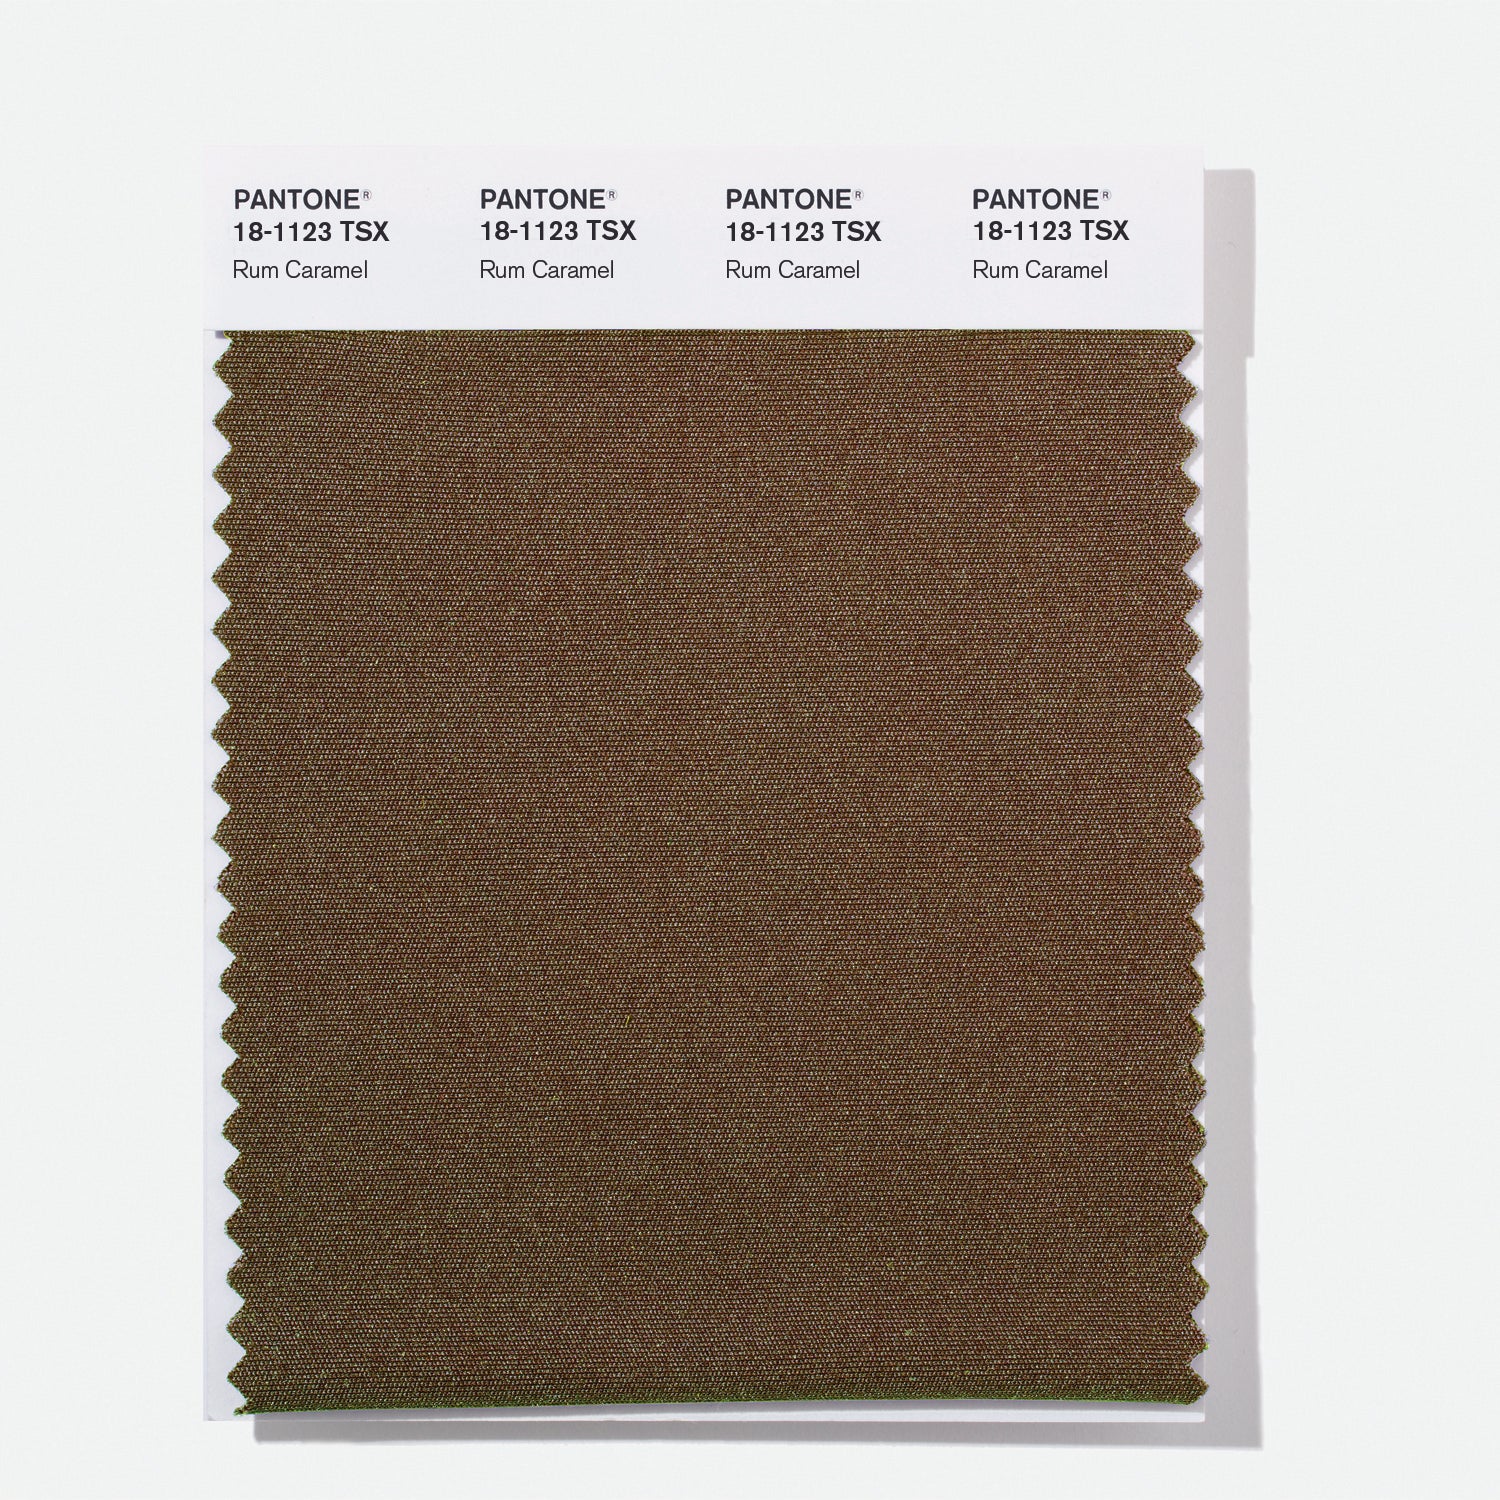 Pantone Polyester Swatch Card 18-1123 TSX (Rum Caramel)